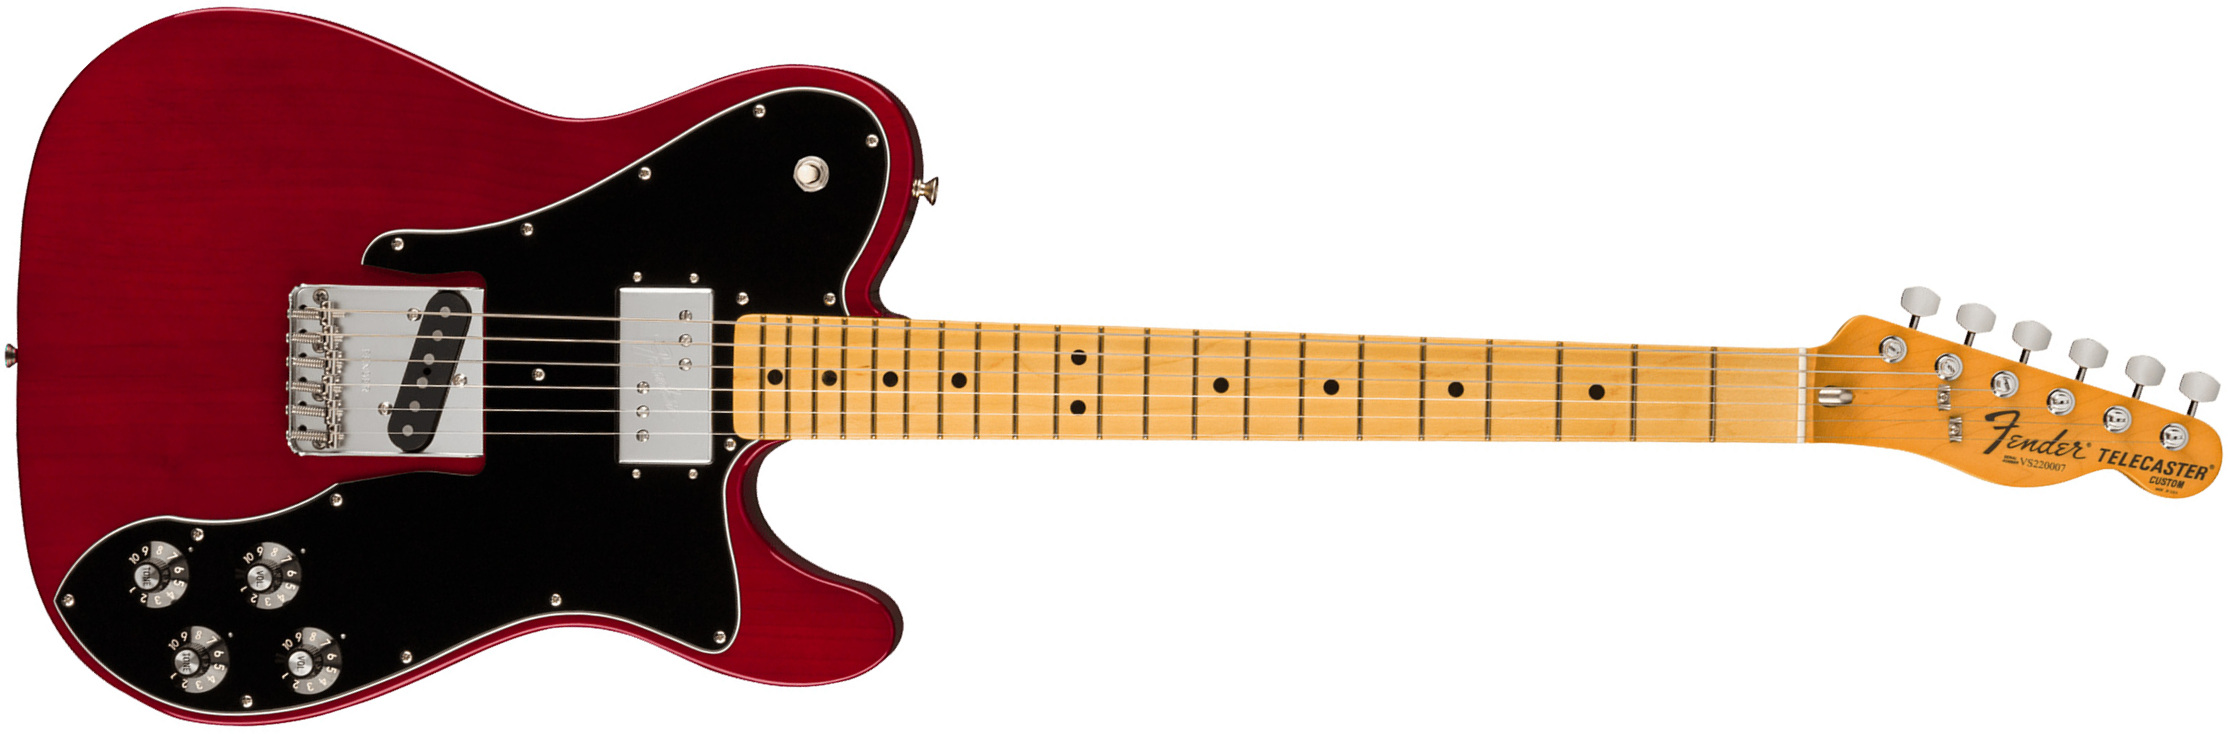 Fender Tele Custom 1977 American Vintage Ii Usa Sh Ht Mn - Wine - E-Gitarre in Teleform - Main picture